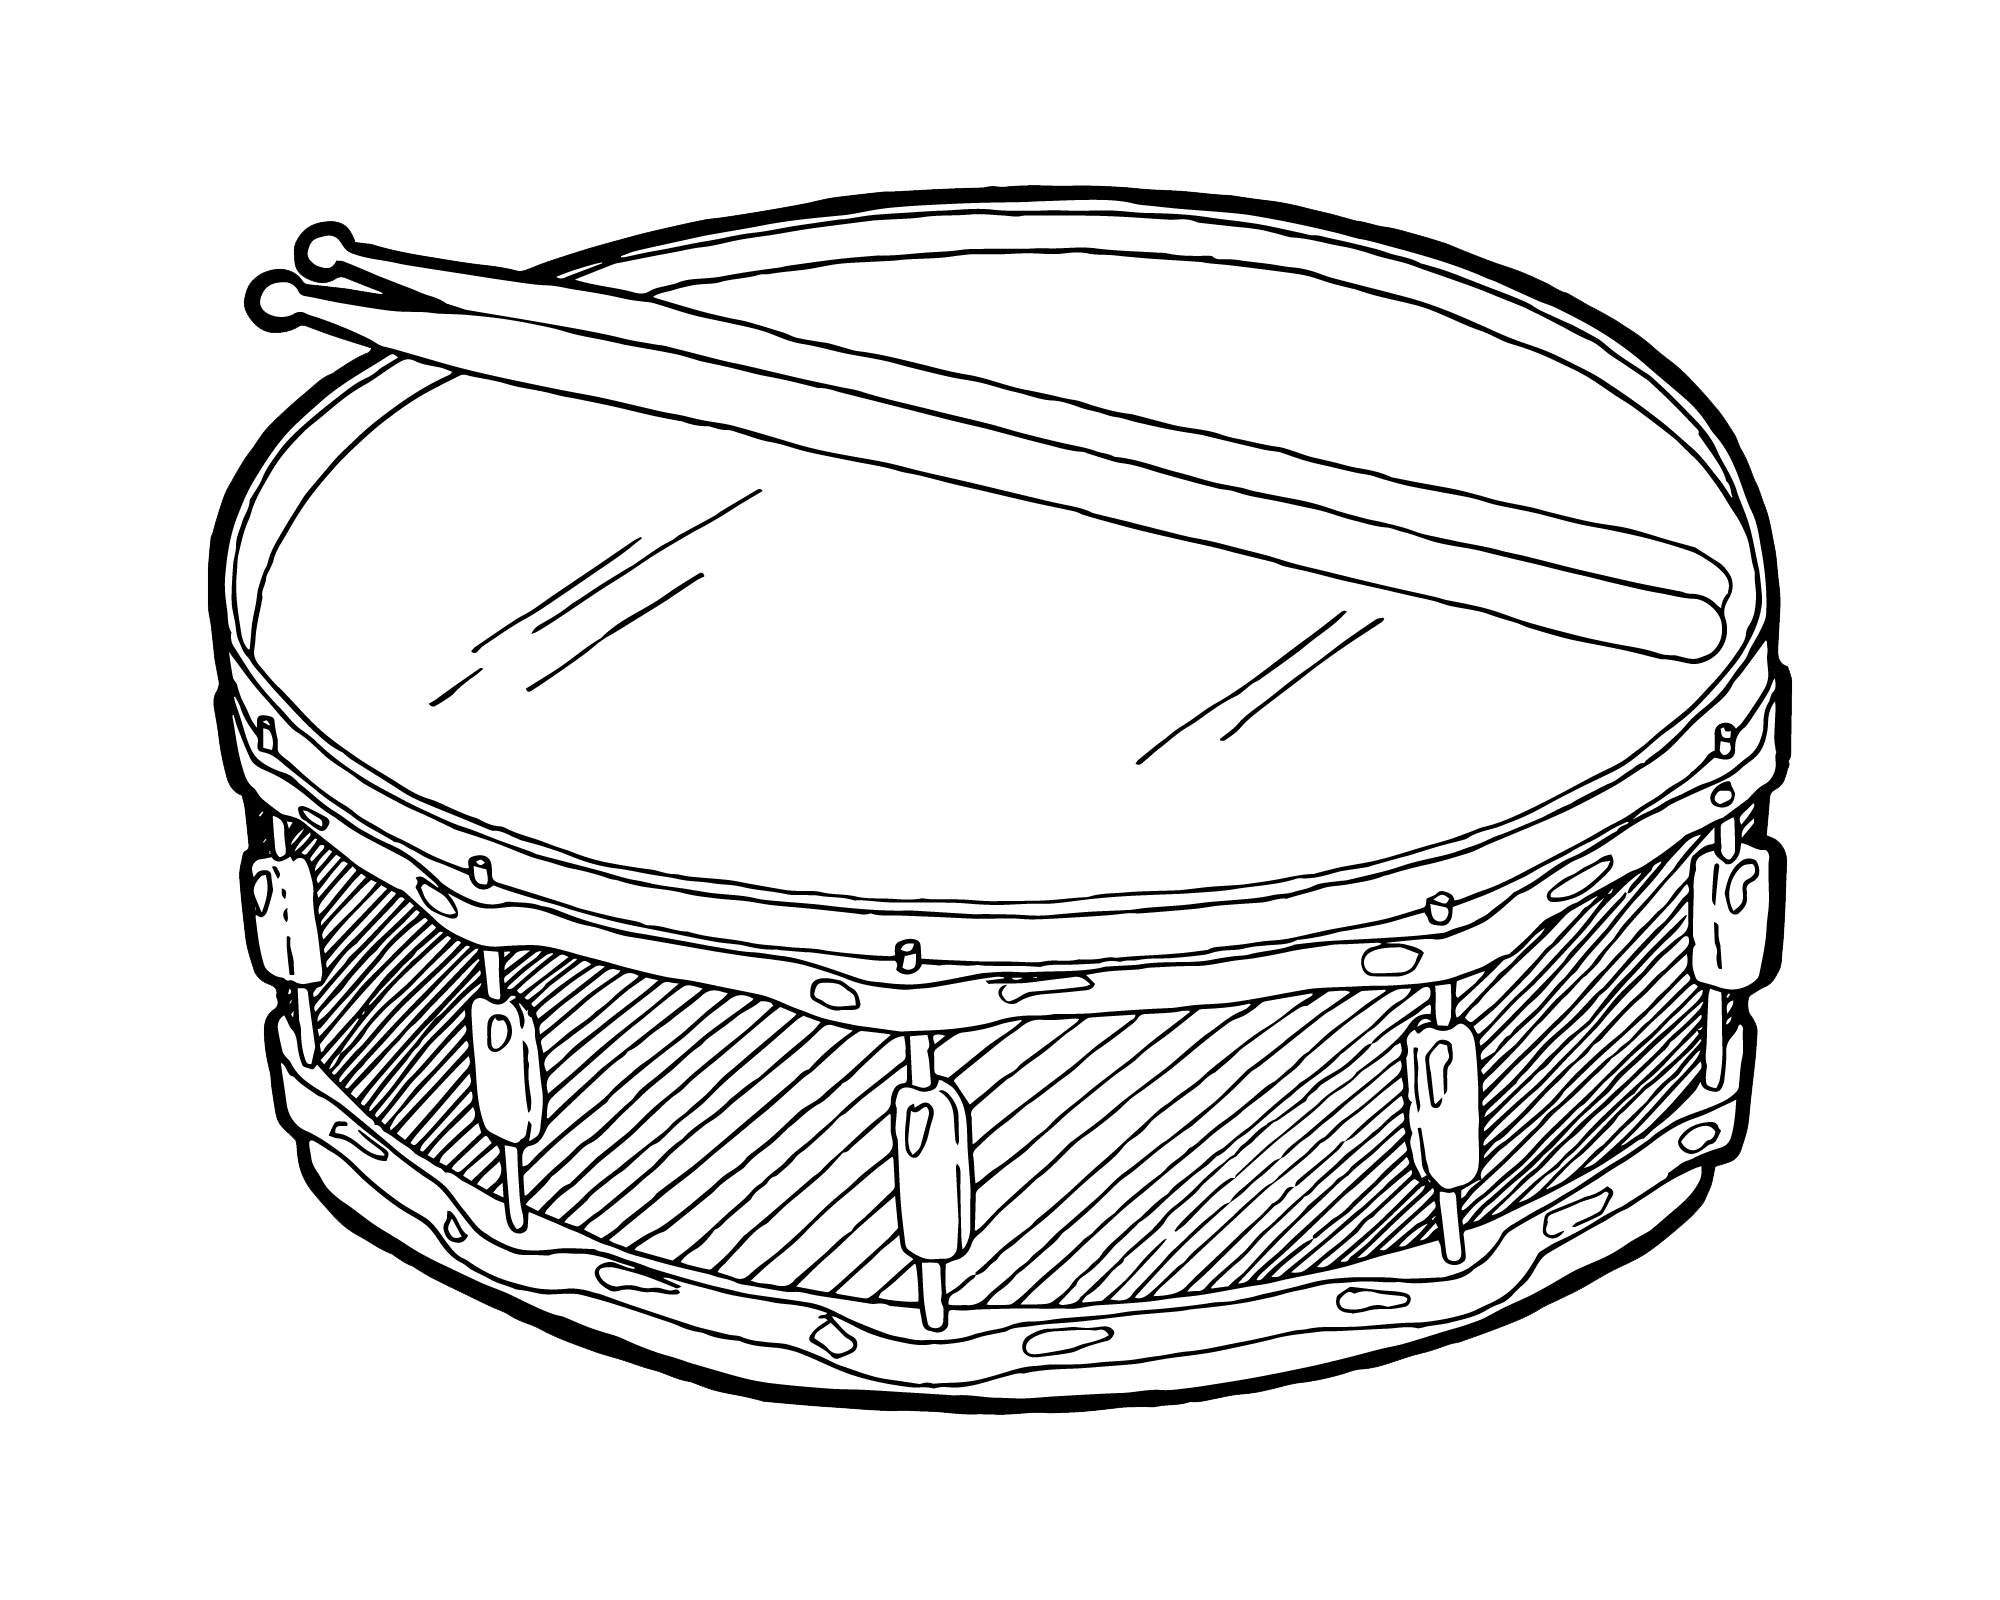 Offbeat Drums Ltd